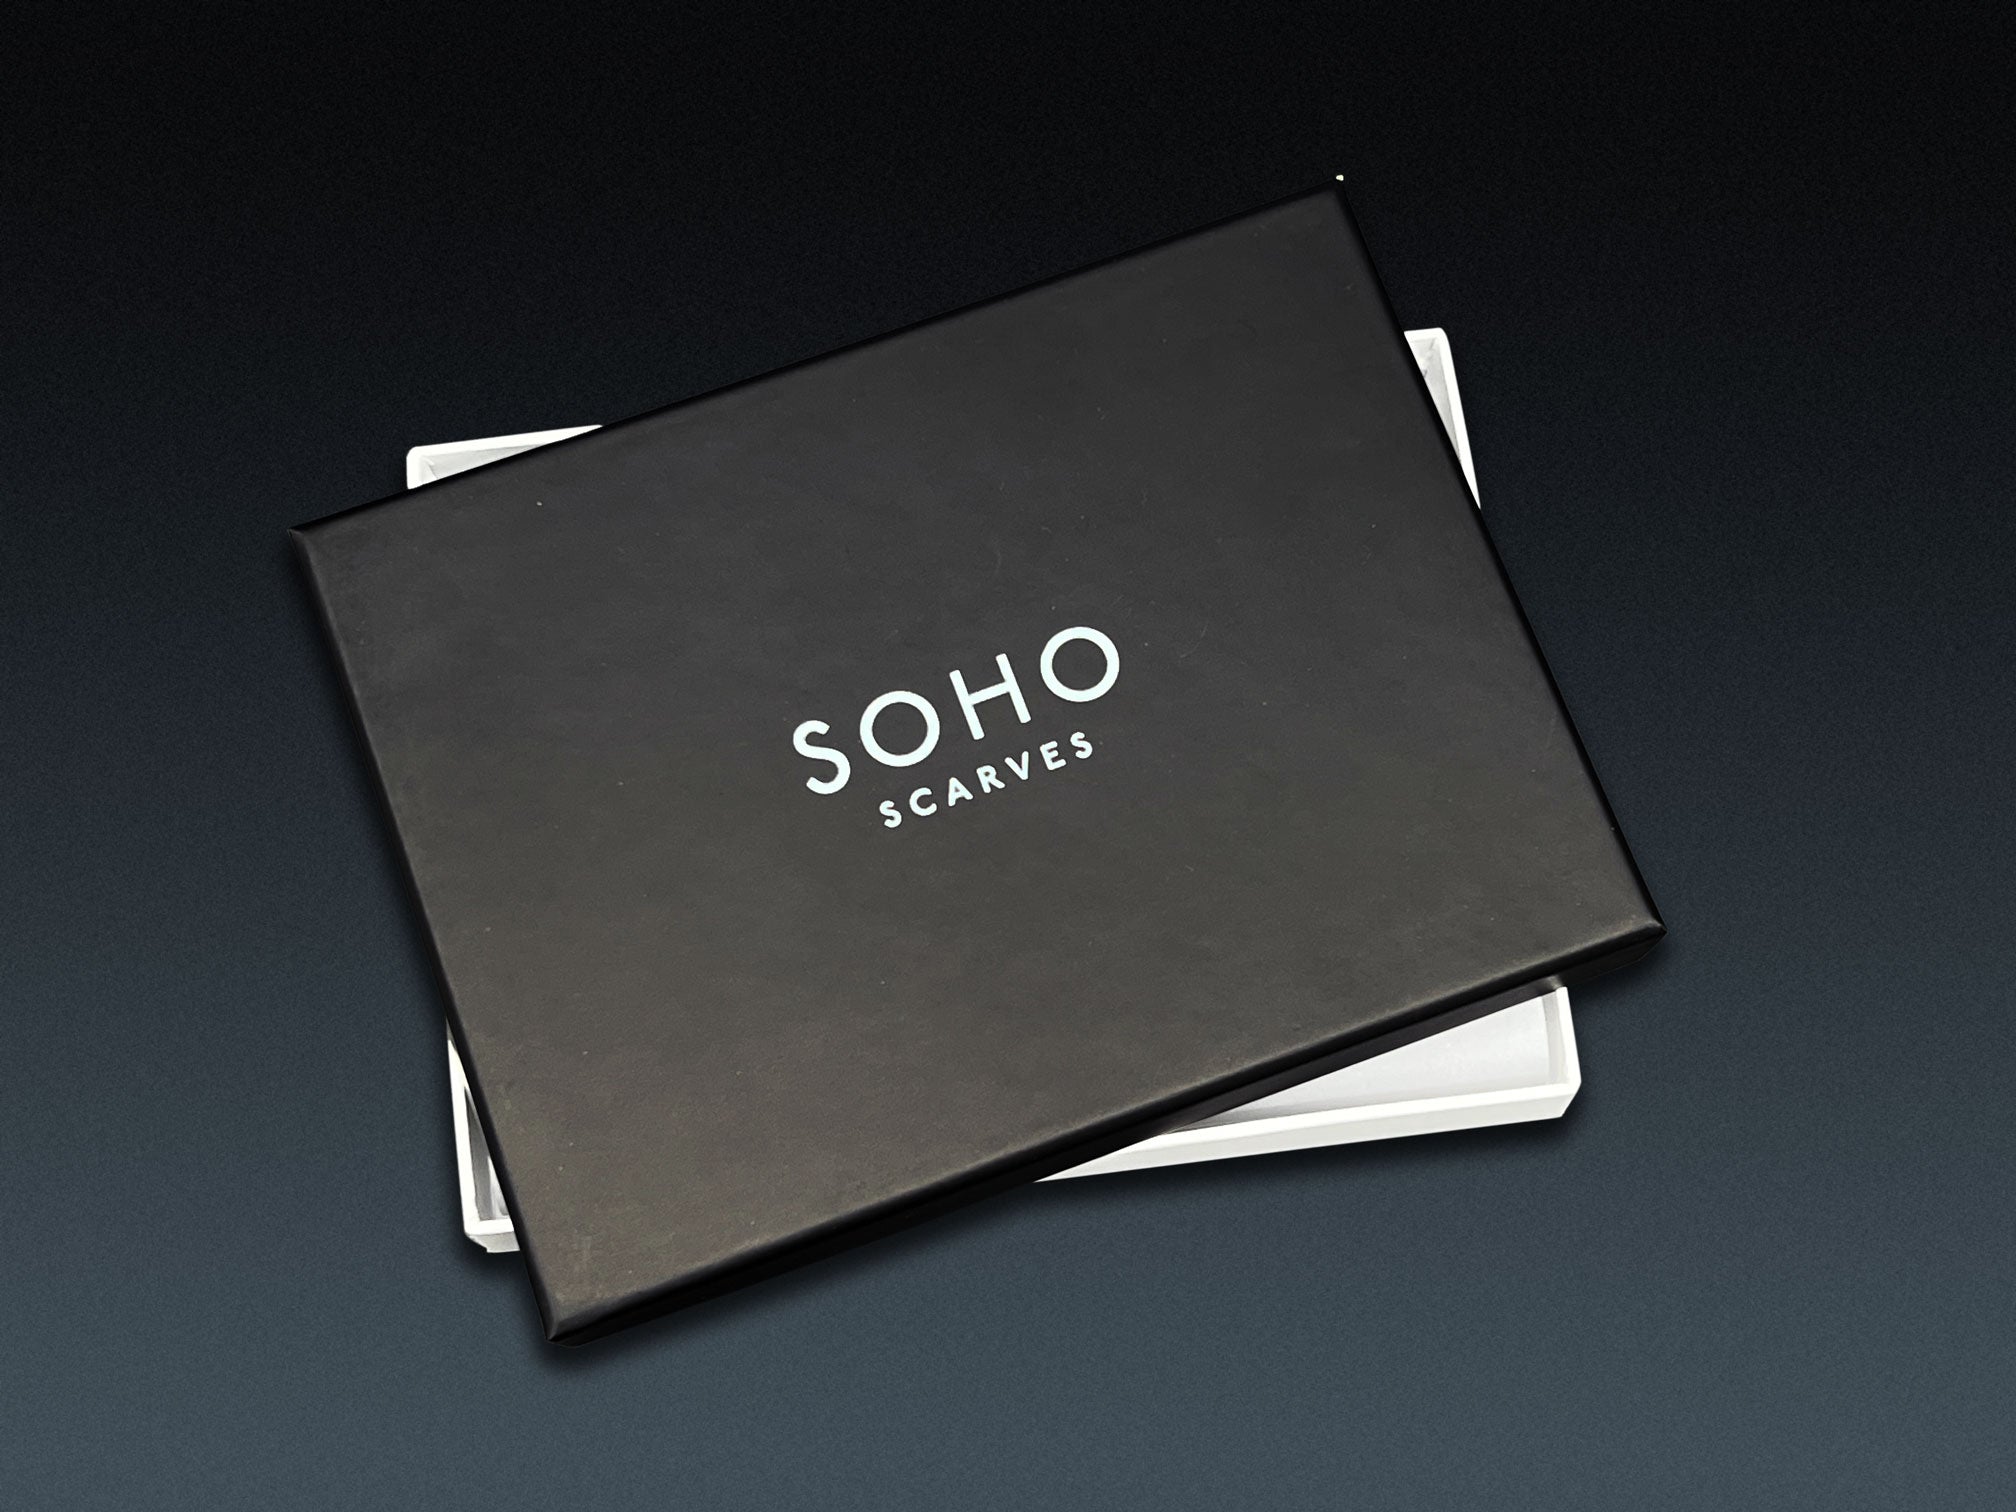 Small deluxe SOHO Scarves gift box. Black branded lid dislodged to reveal white inner box.